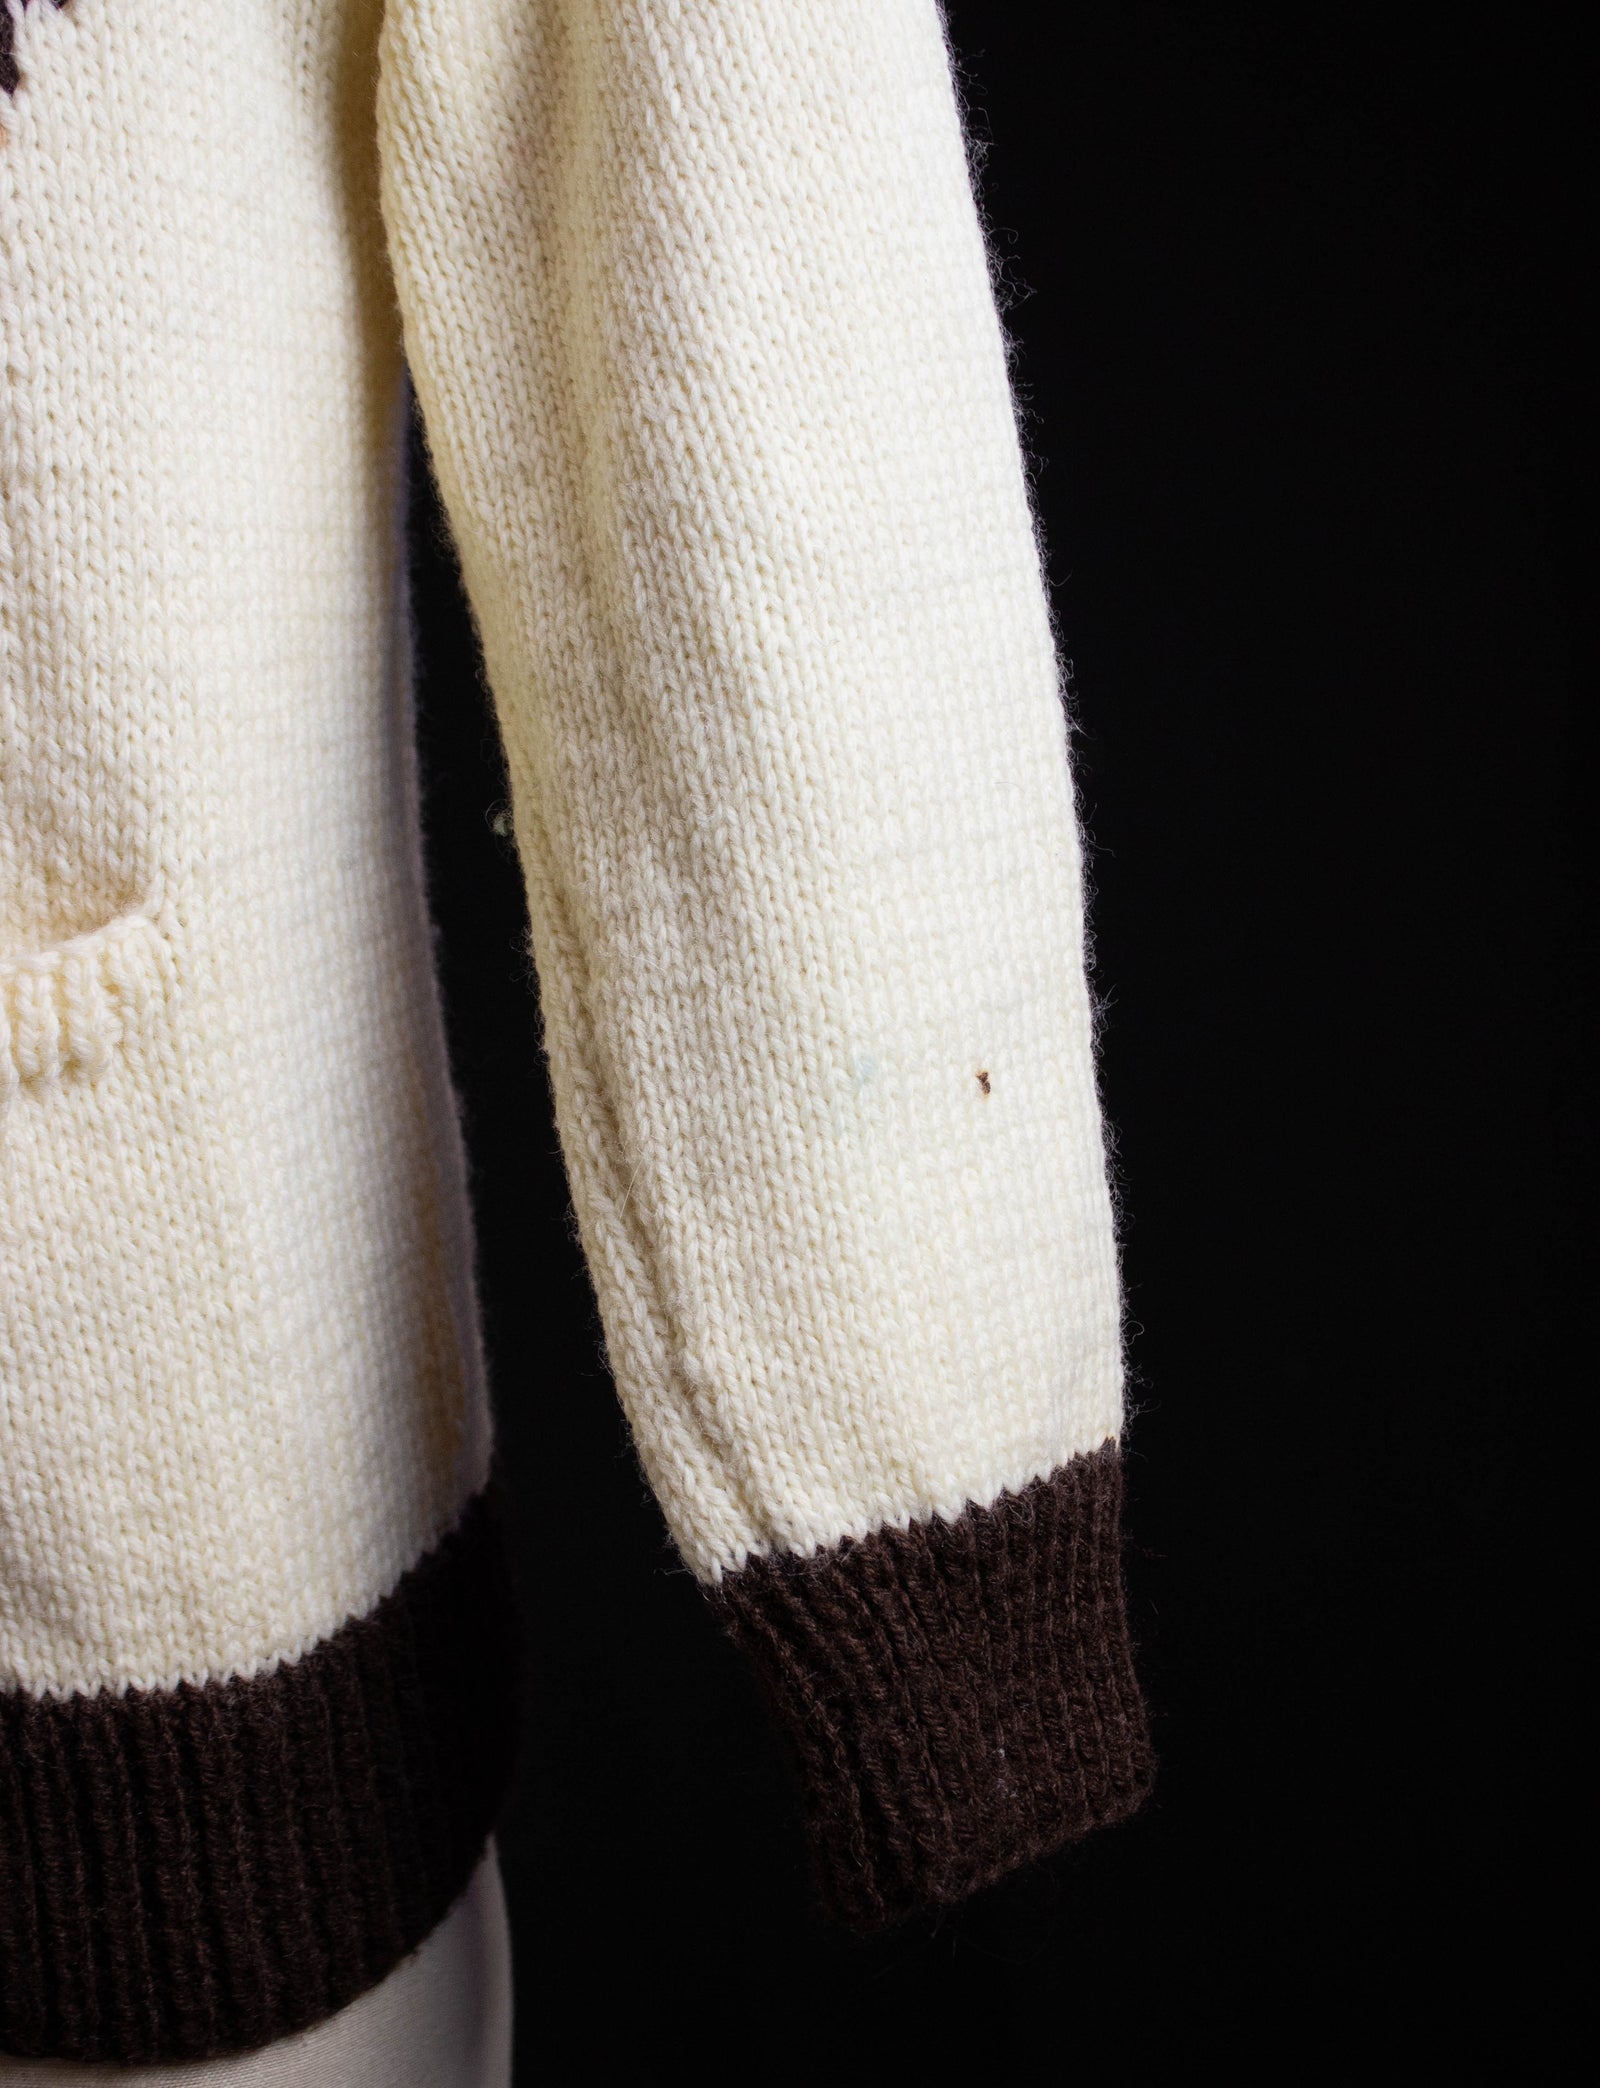 Vintage Deer Print Knit Cowichan Sweater 70s Zip Up Two Tone Cream and Brown Medium